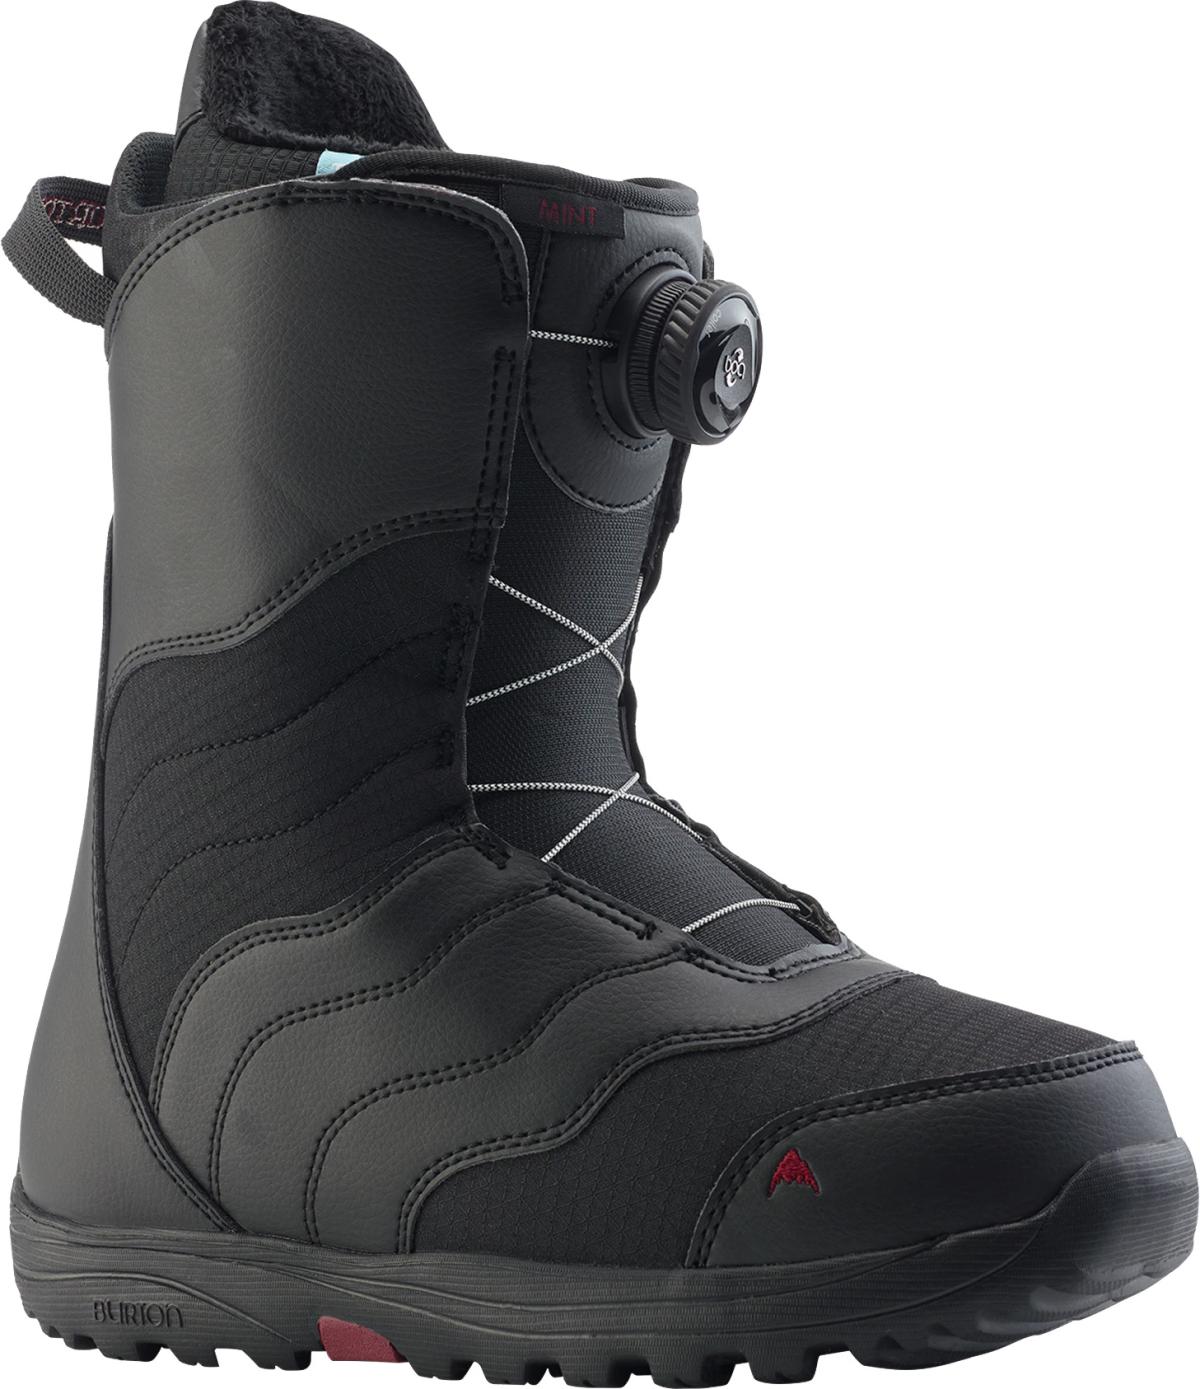 Burton Mint Boa snowboard boots